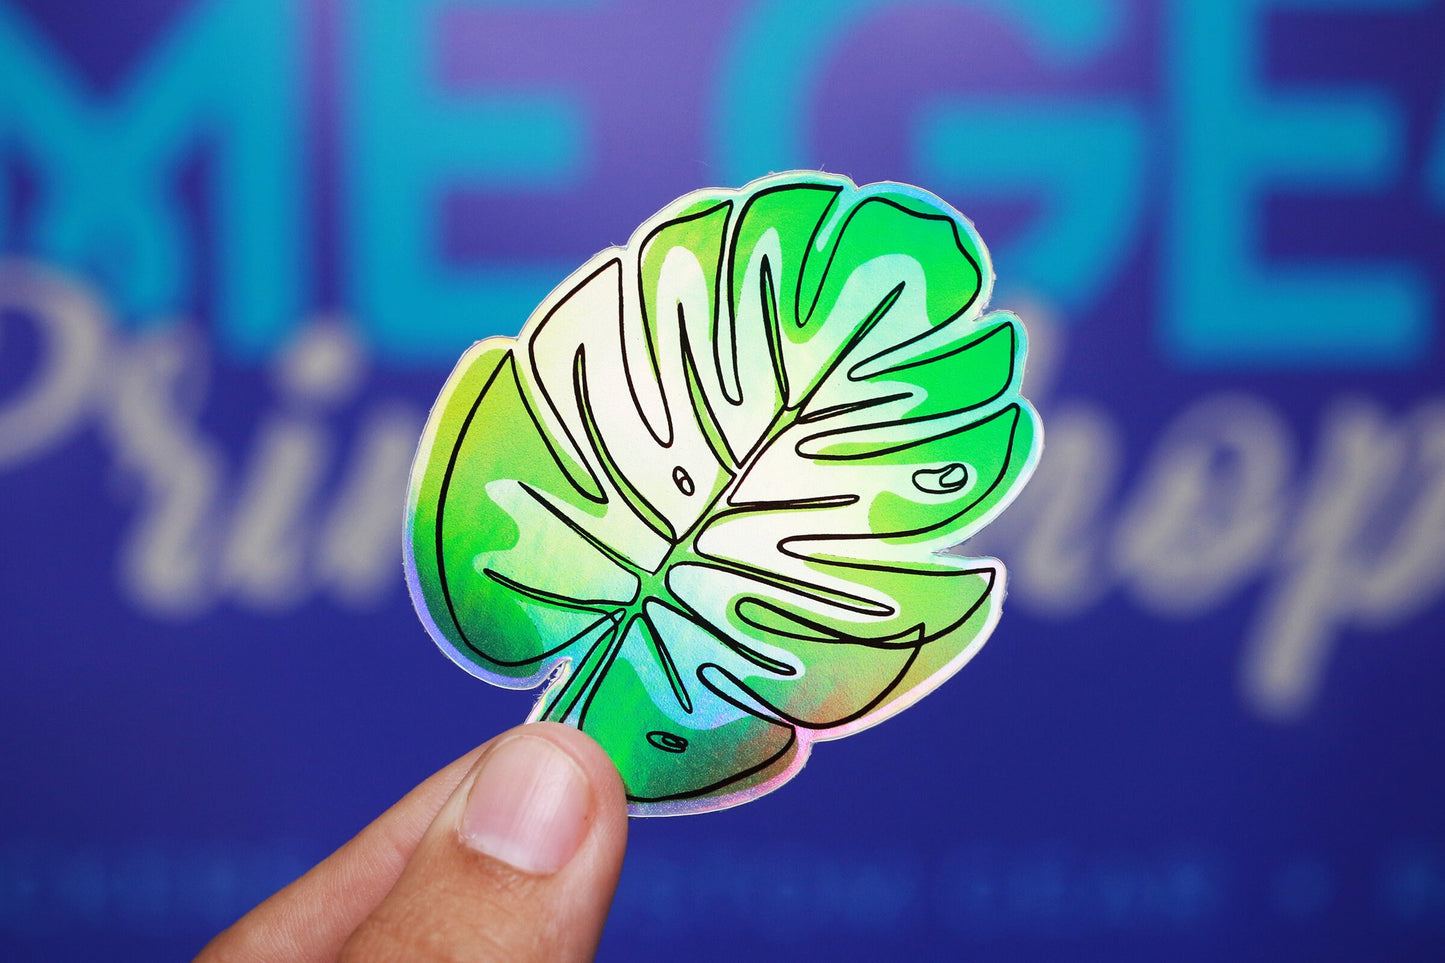 Sticker - Holographic Leaf 